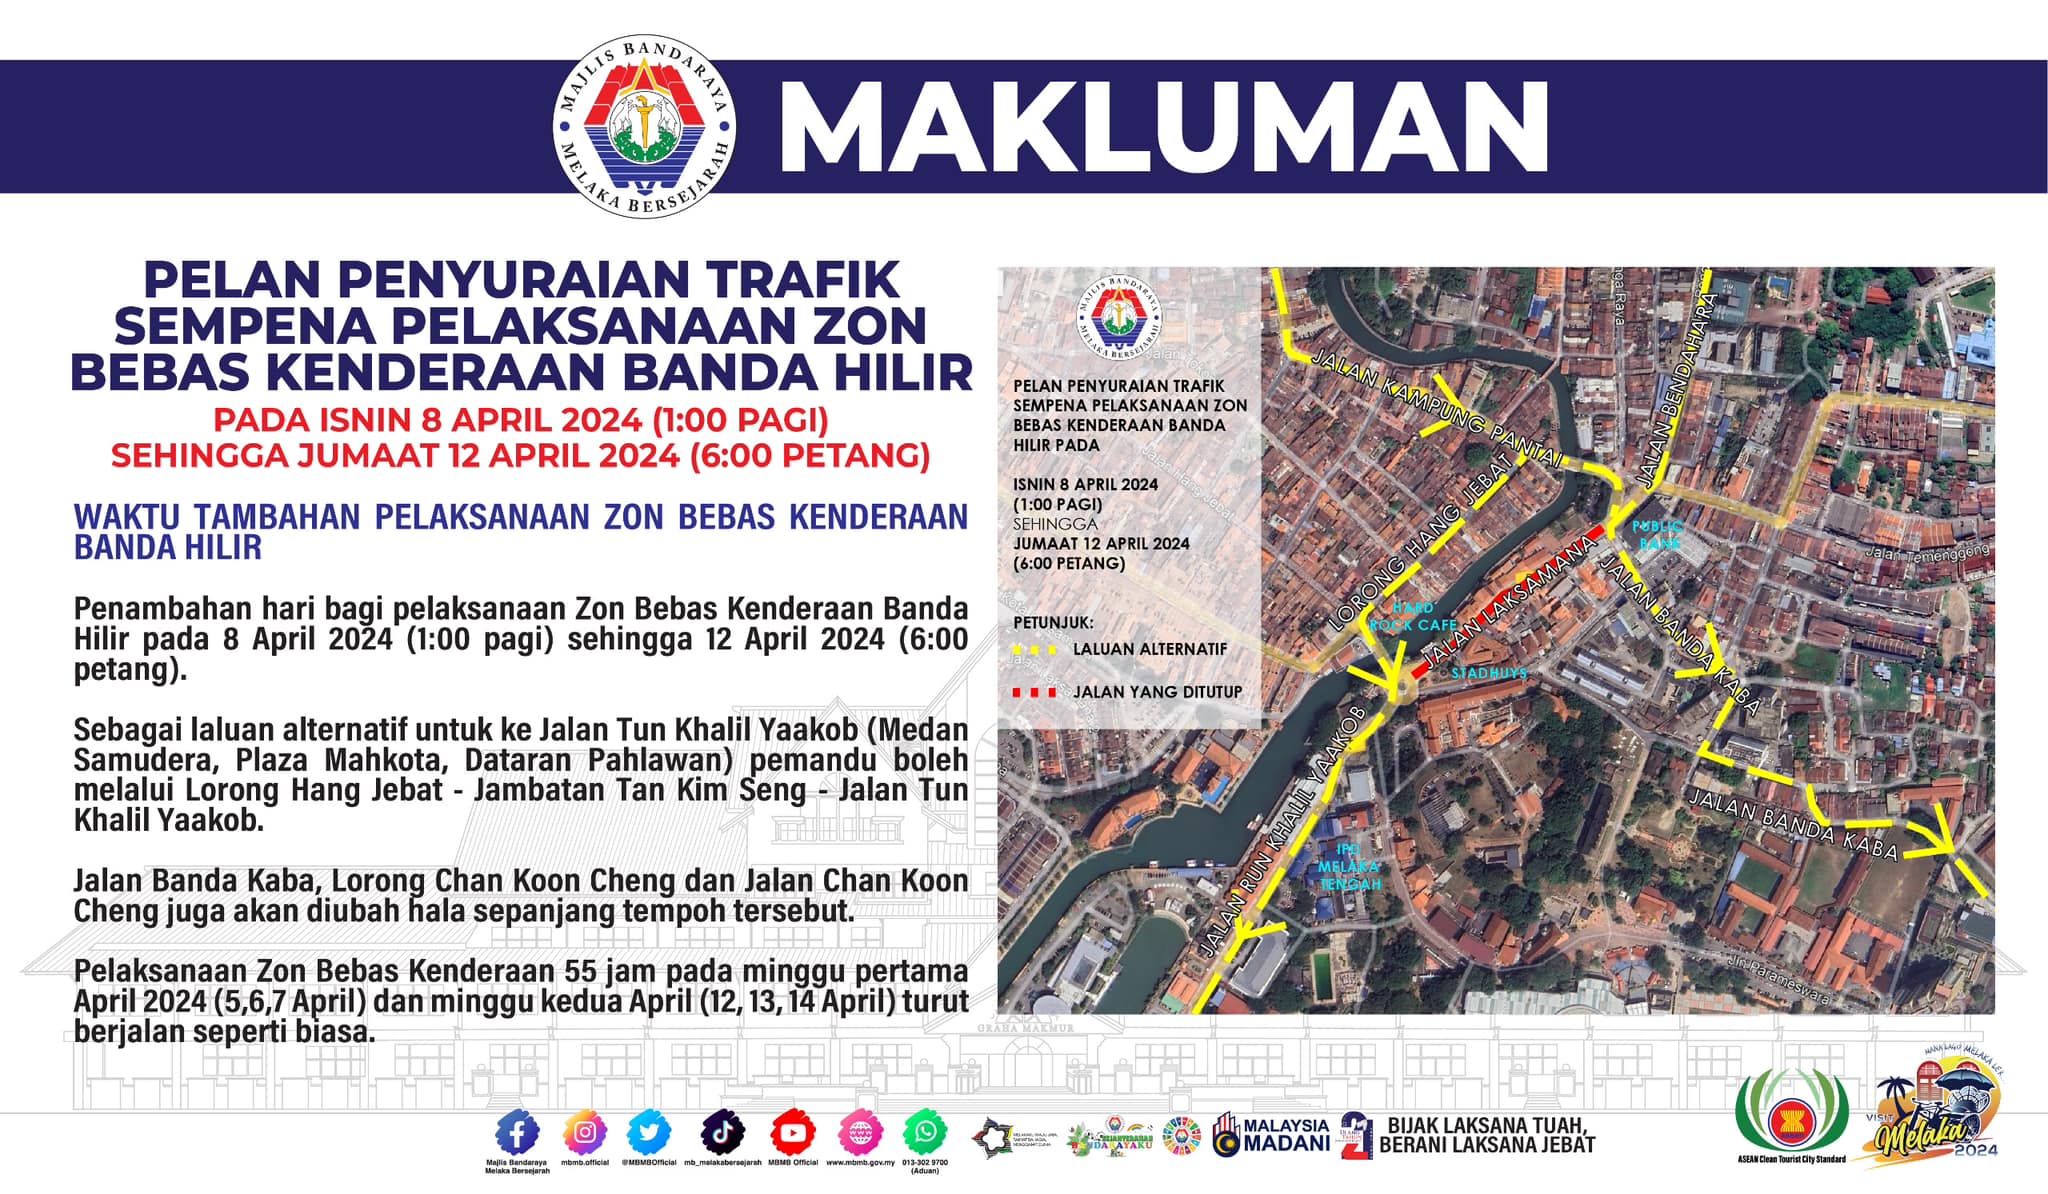 Melaka Extended Car-Free Zone During Hari Raya Aidilfitri Holidays in April 2024